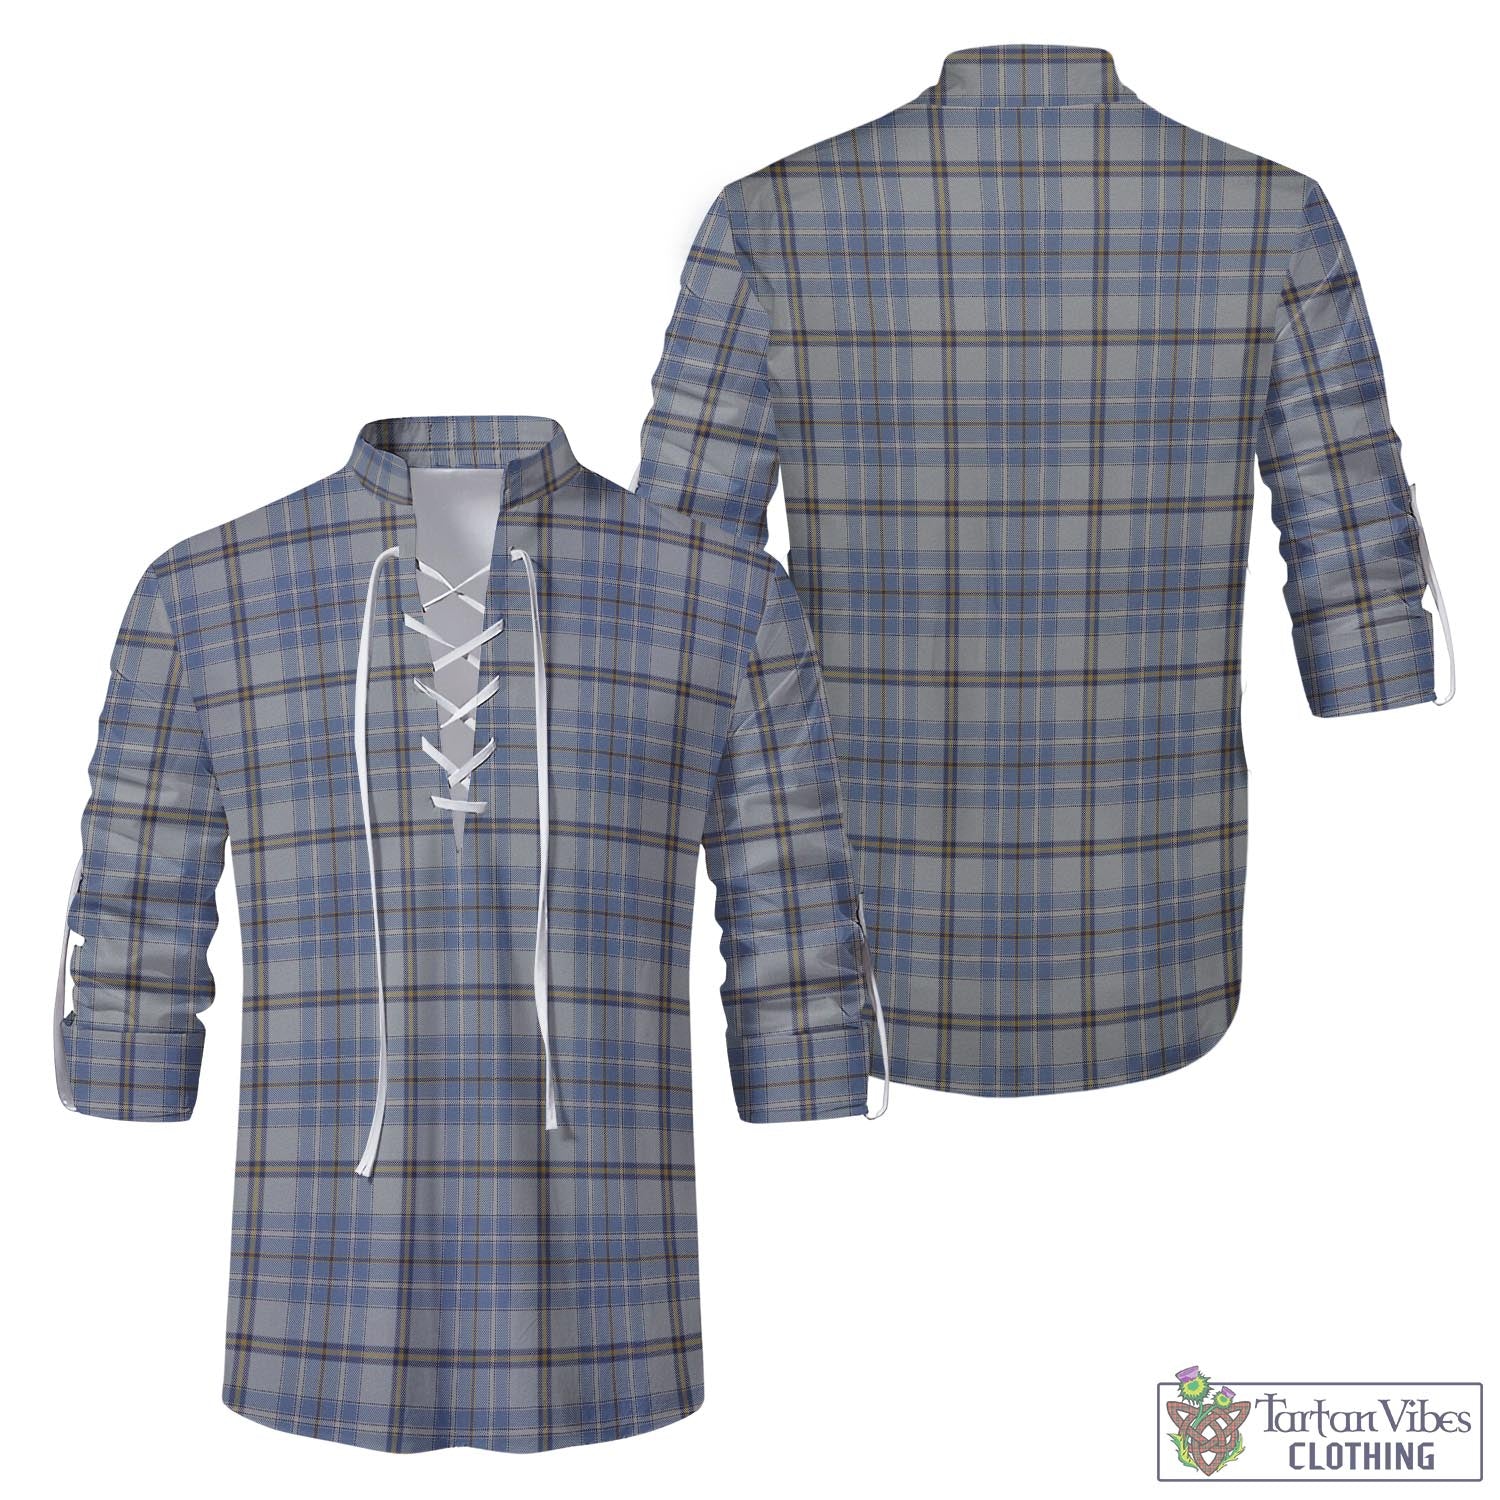 Tartan Vibes Clothing Tweedie Tartan Men's Scottish Traditional Jacobite Ghillie Kilt Shirt